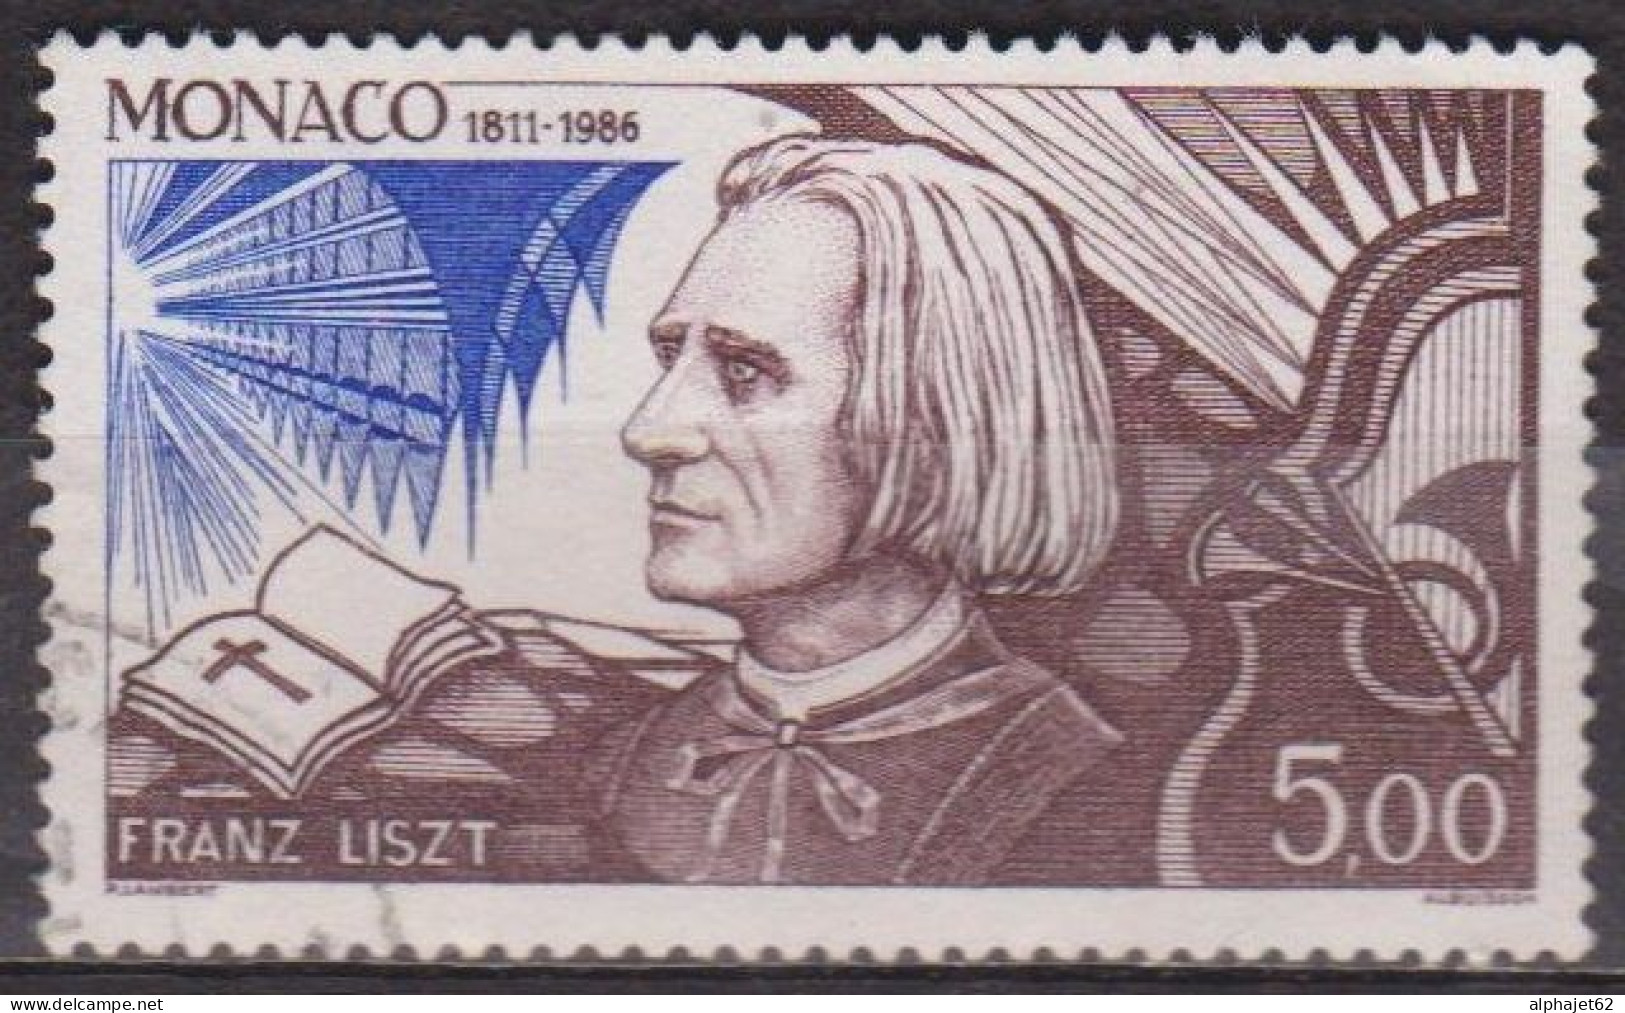 Musque - MONACO - Franz Liszt, Compositeur - N° 1548 - 1986 - Gebraucht